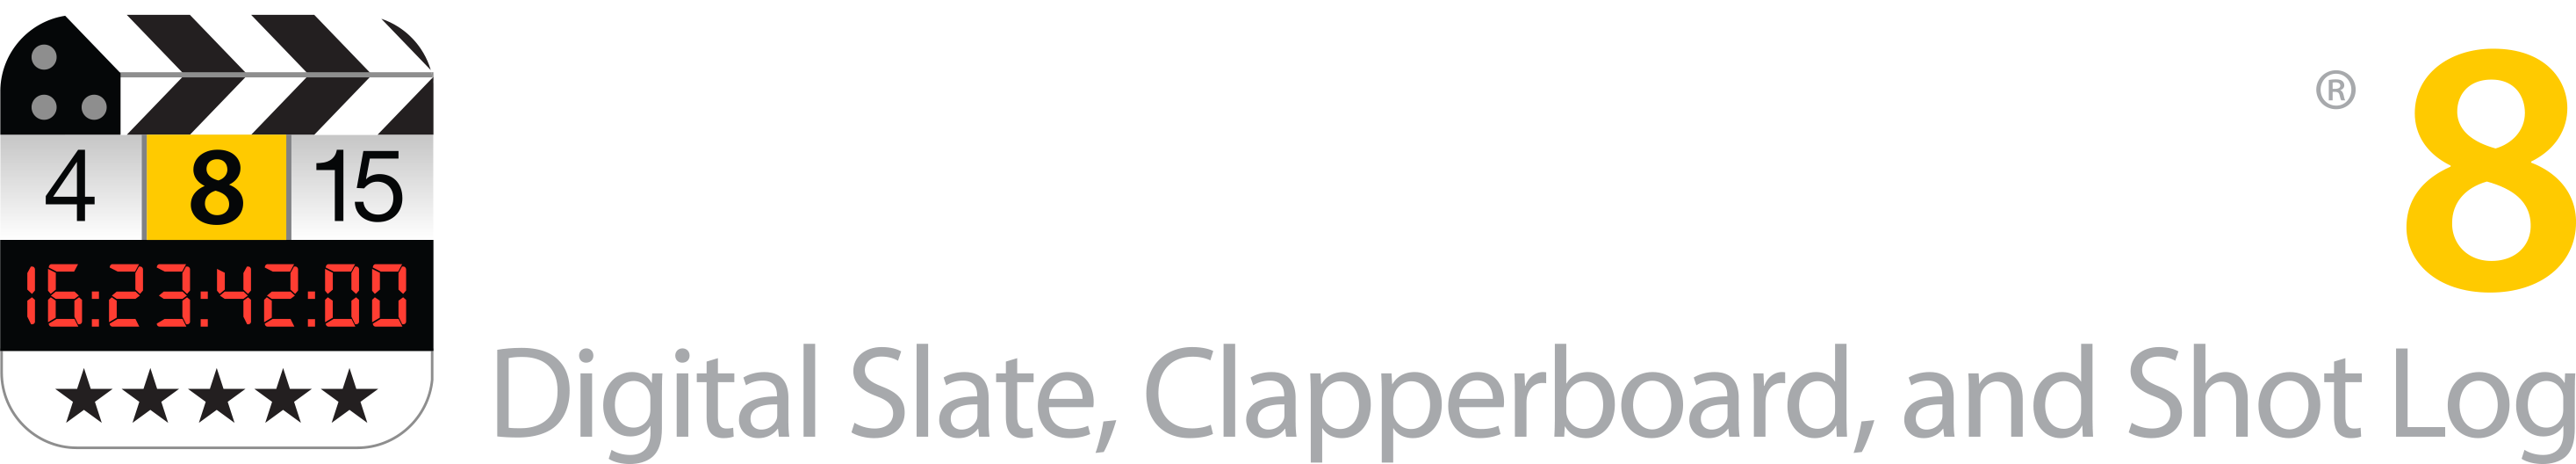 Image: MovieSlate 8 Logo on black